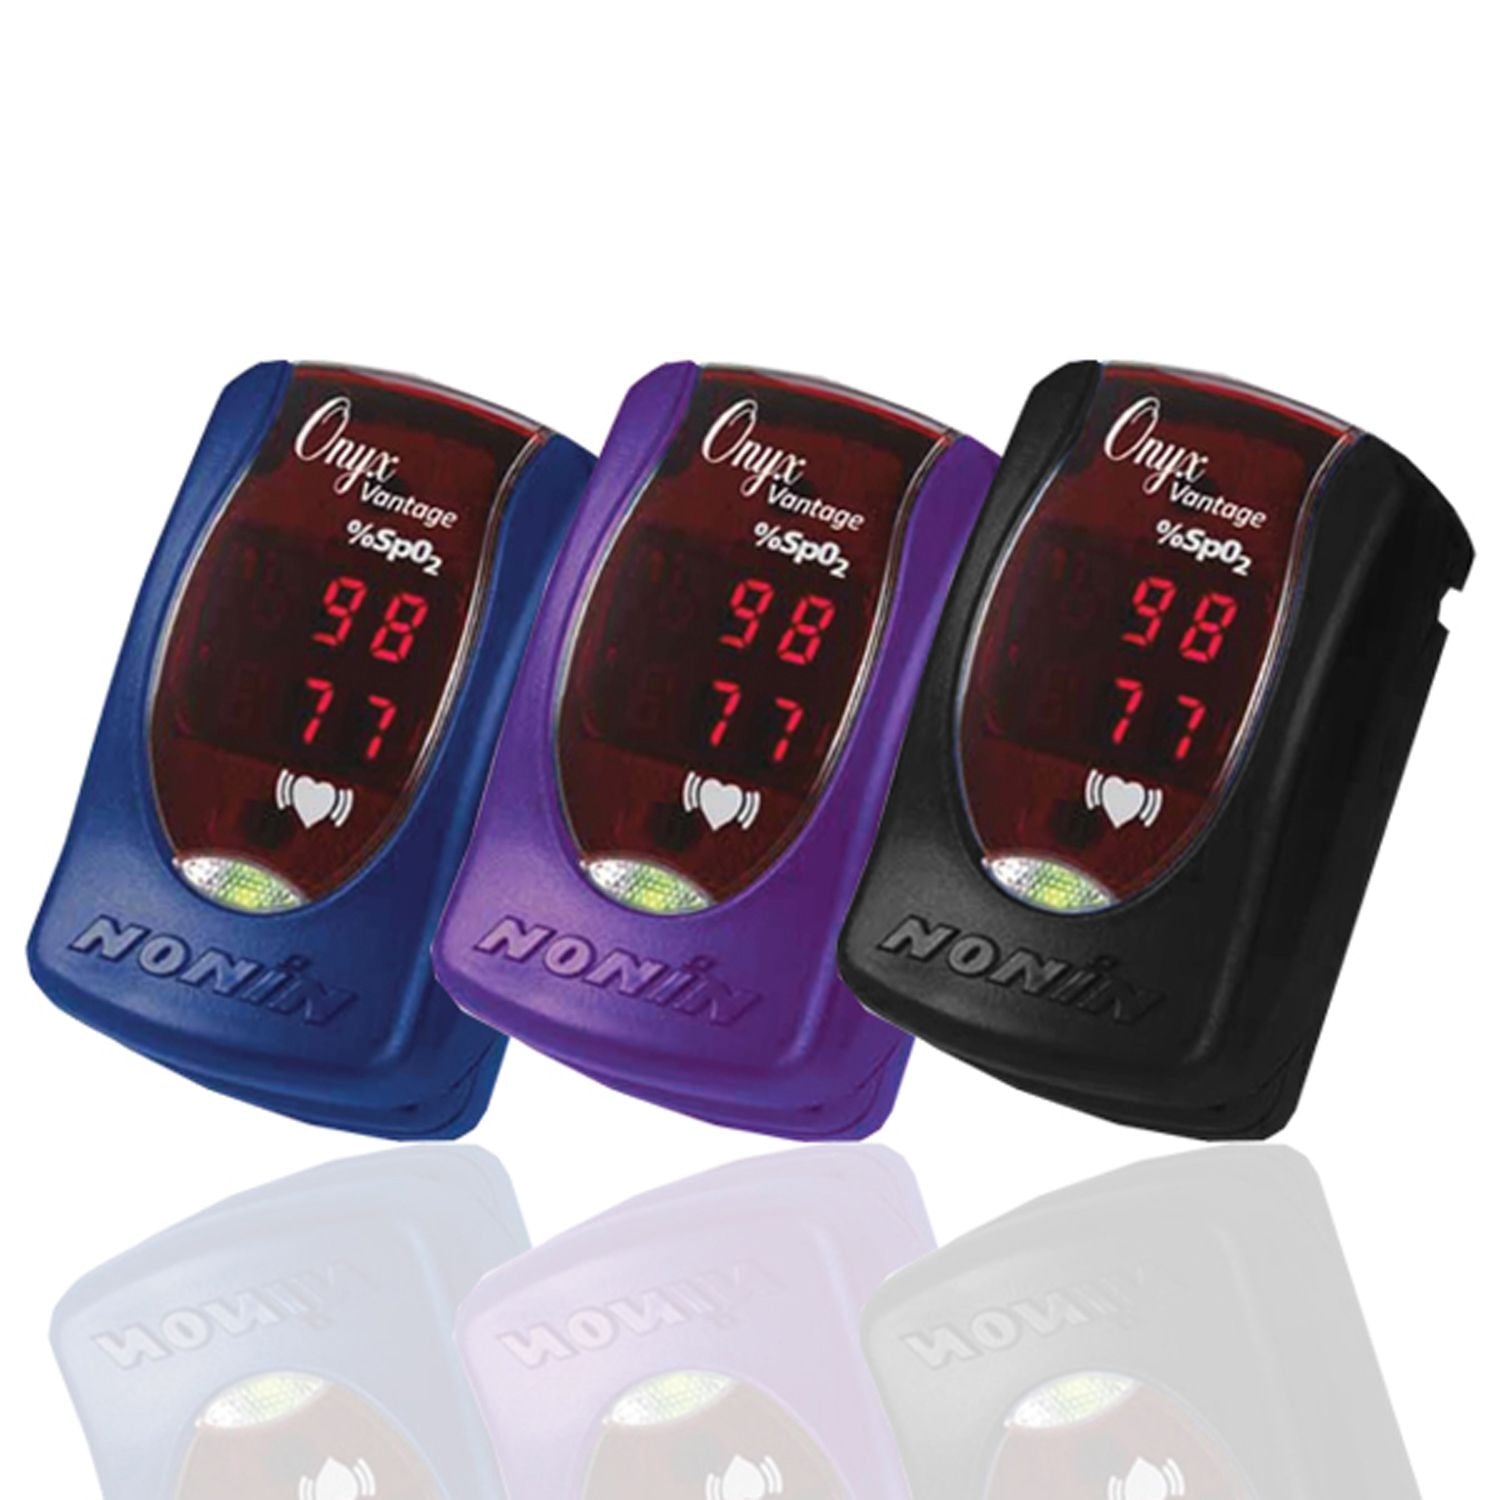 ONYX9590 Vantage Pulse Oximeter | Red